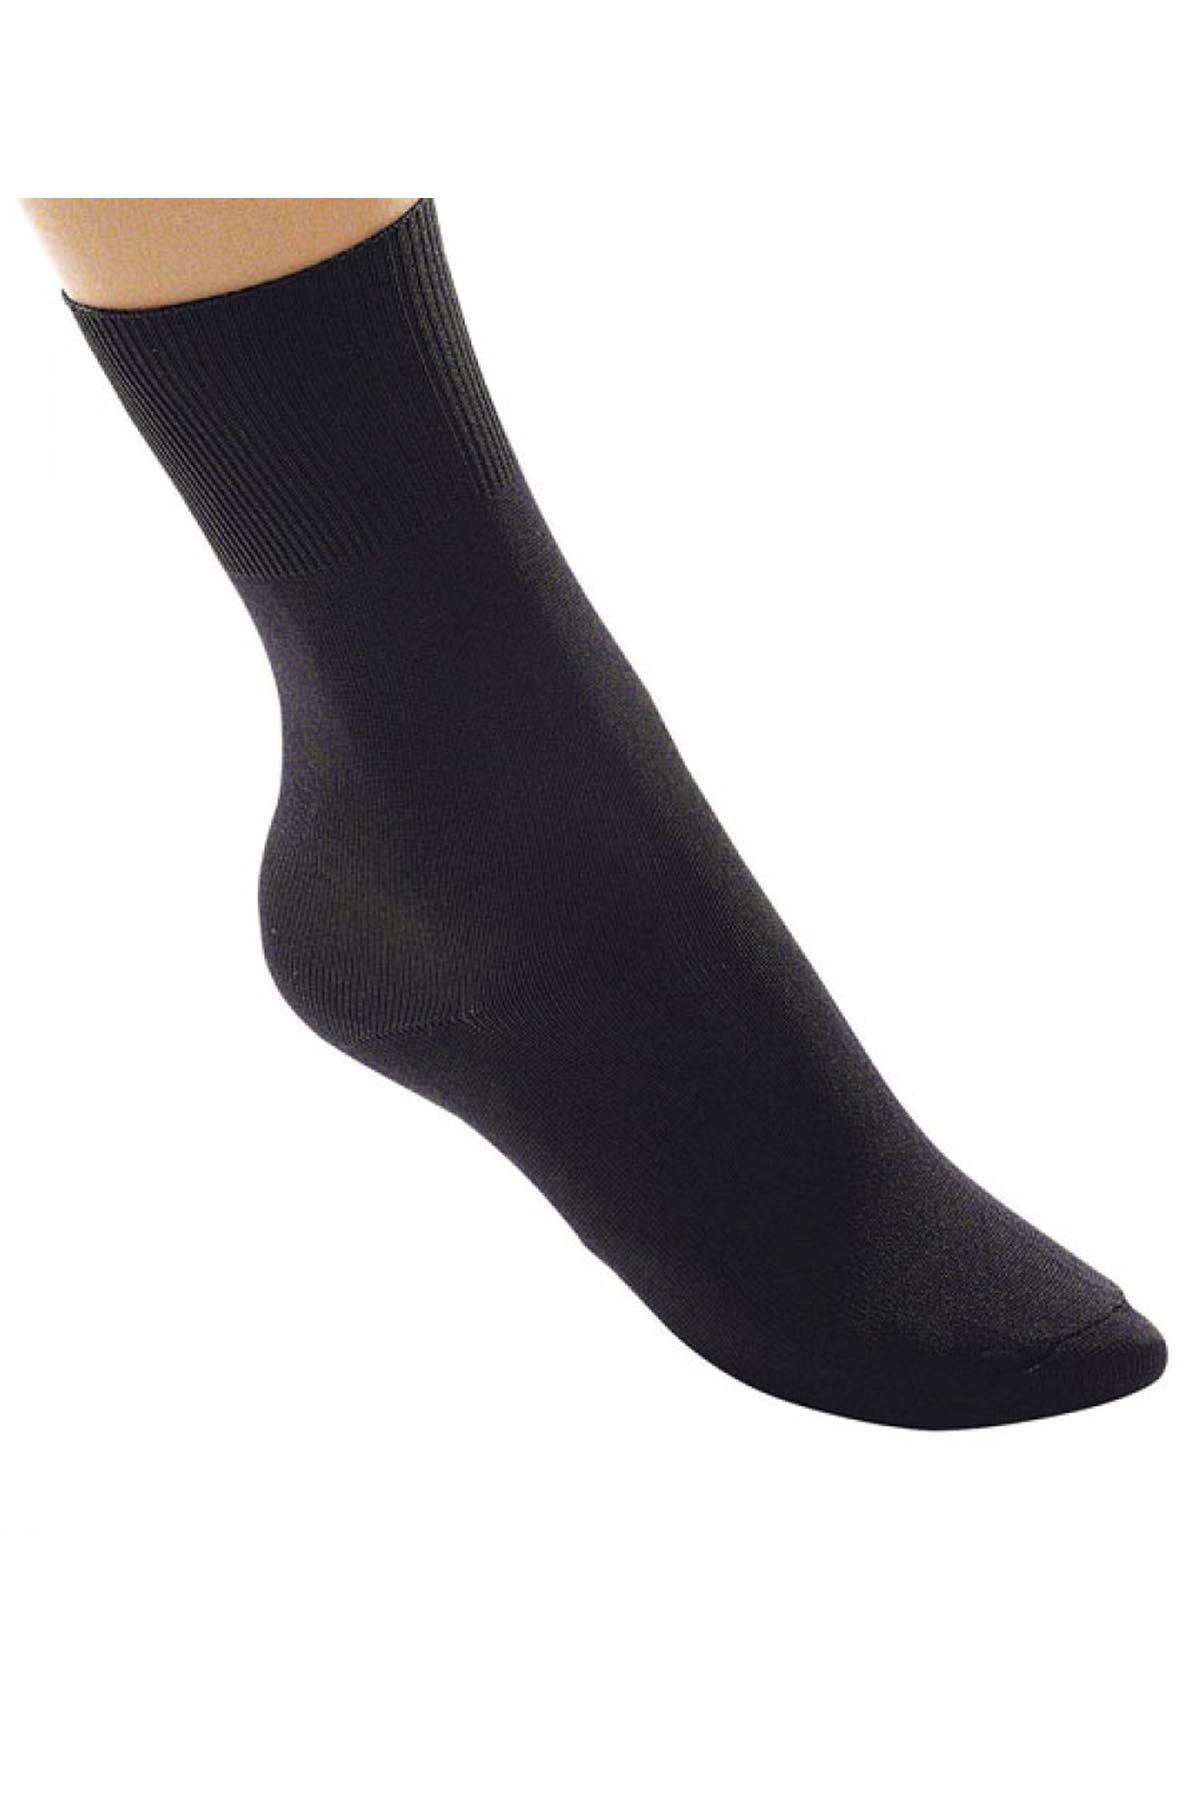 Uniform Black Sock (IDS Ballet Sock)